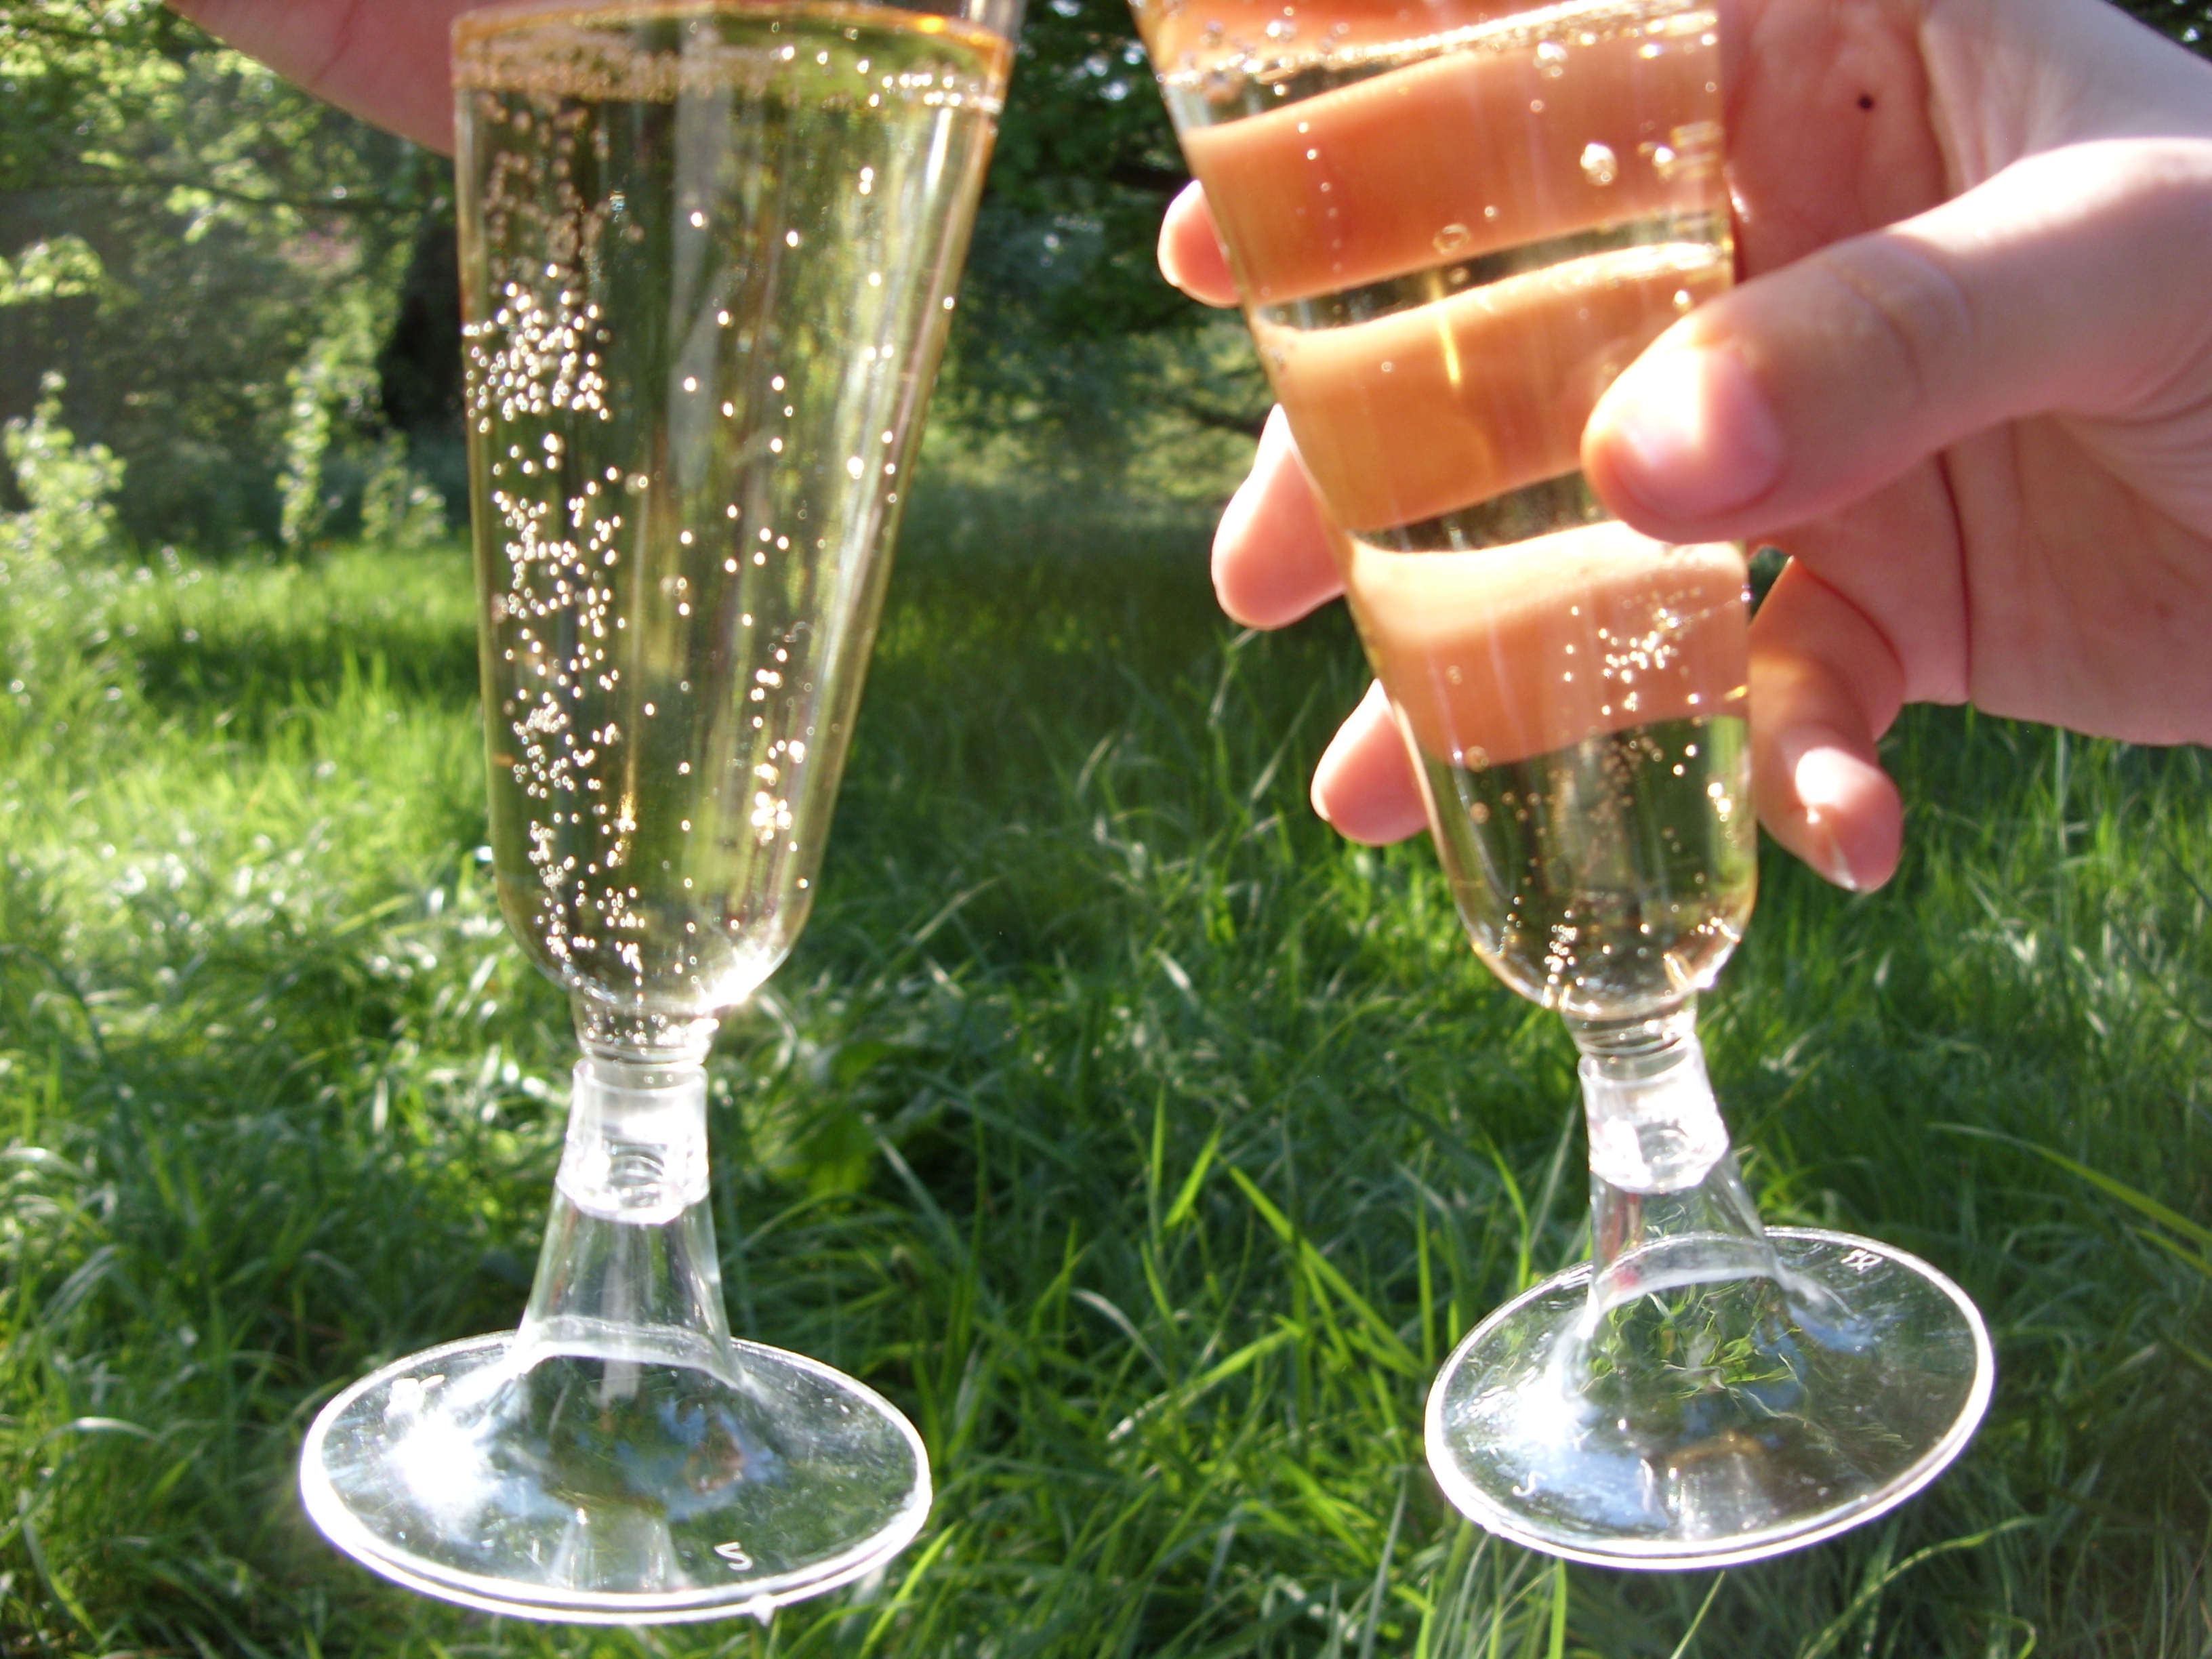 https://upload.wikimedia.org/wikipedia/commons/6/6d/Champagne_glasses.JPG